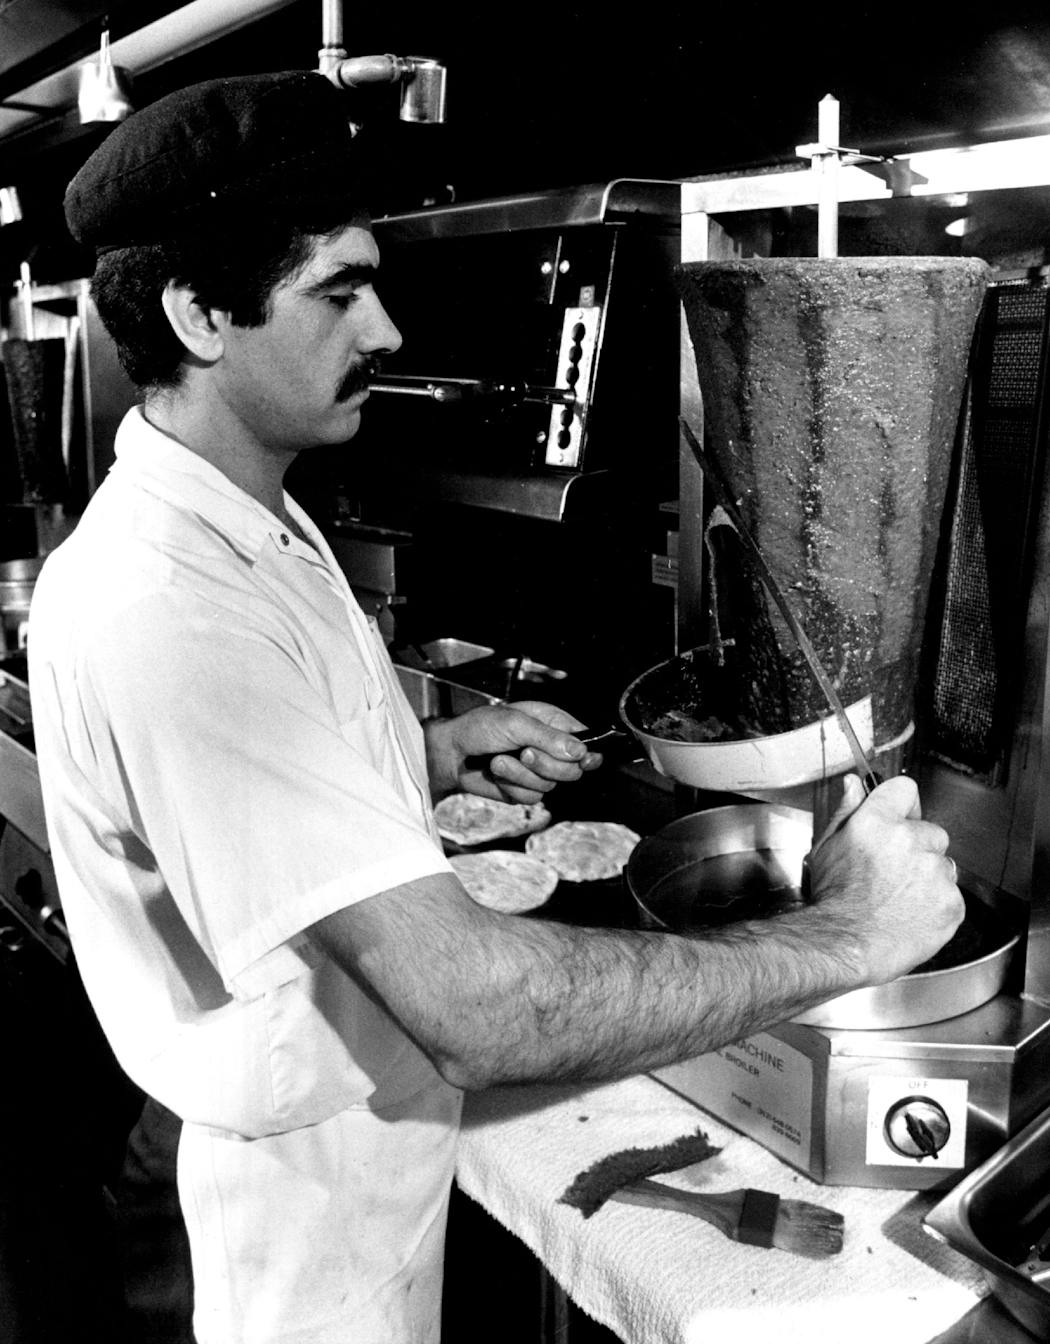 In 1985, co-owner Argyris Arambadjis sliced shawirma in the kitchen of It’s Greek to Me.